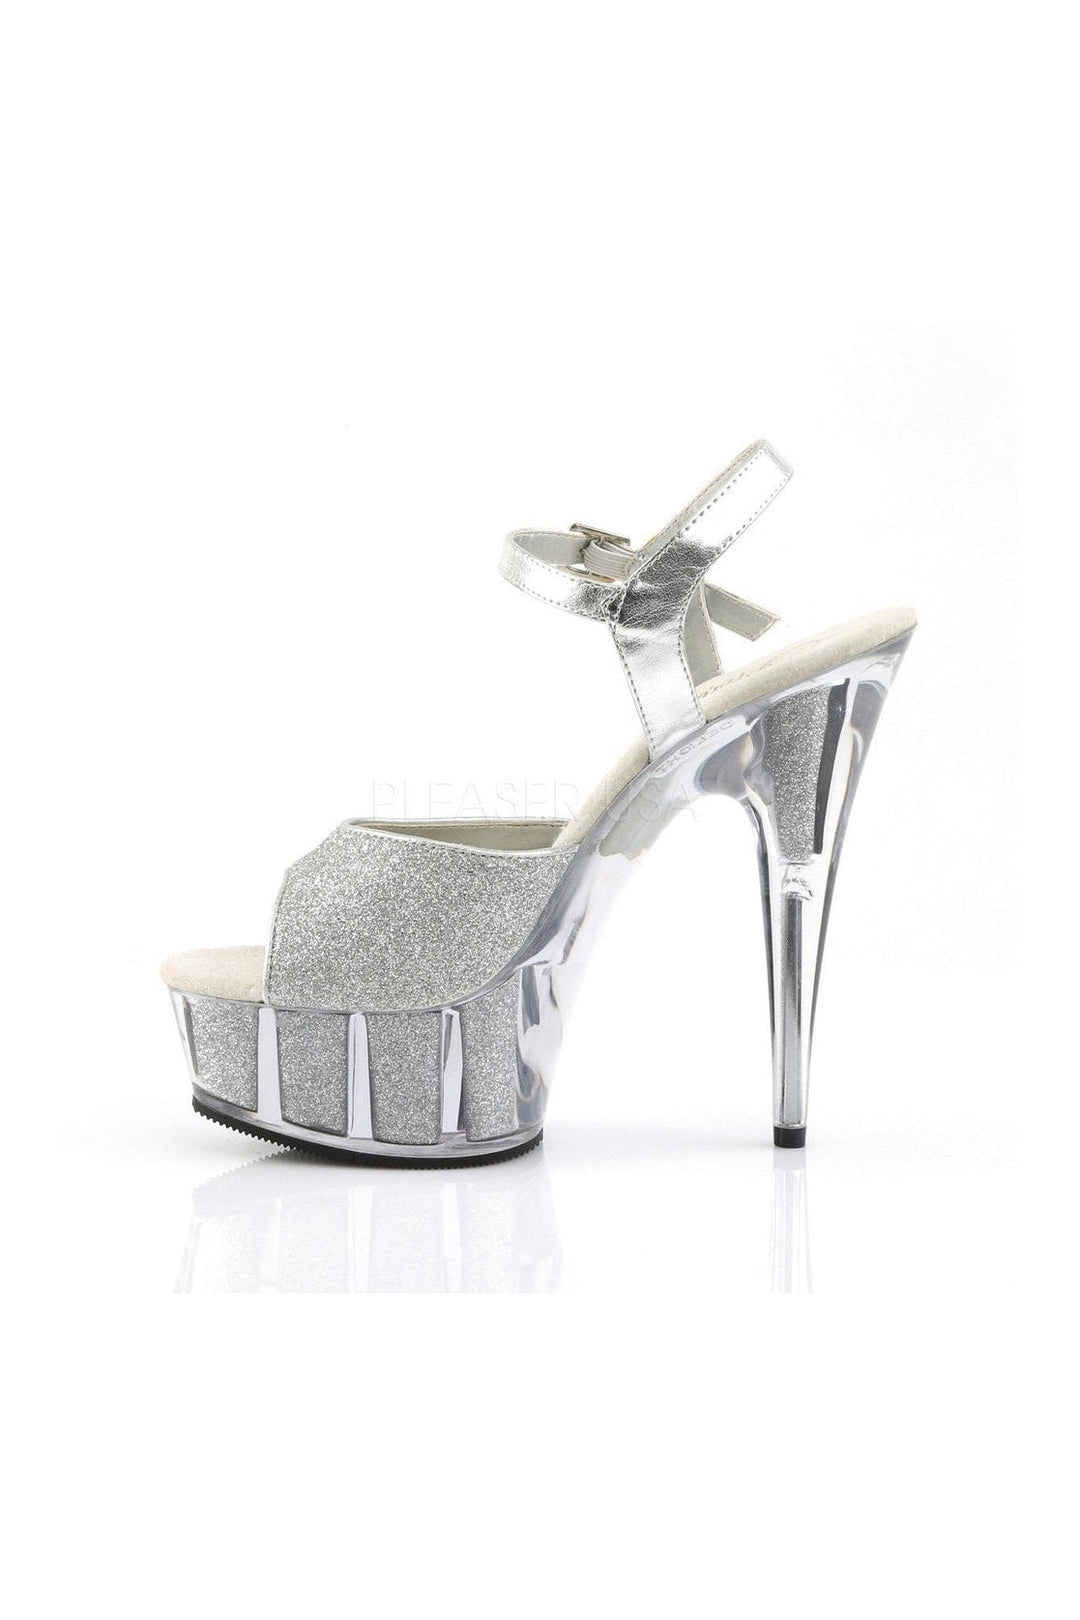 DELIGHT-609-5G Platform Sandal | Silver Glitter-Pleaser-Sandals-SEXYSHOES.COM